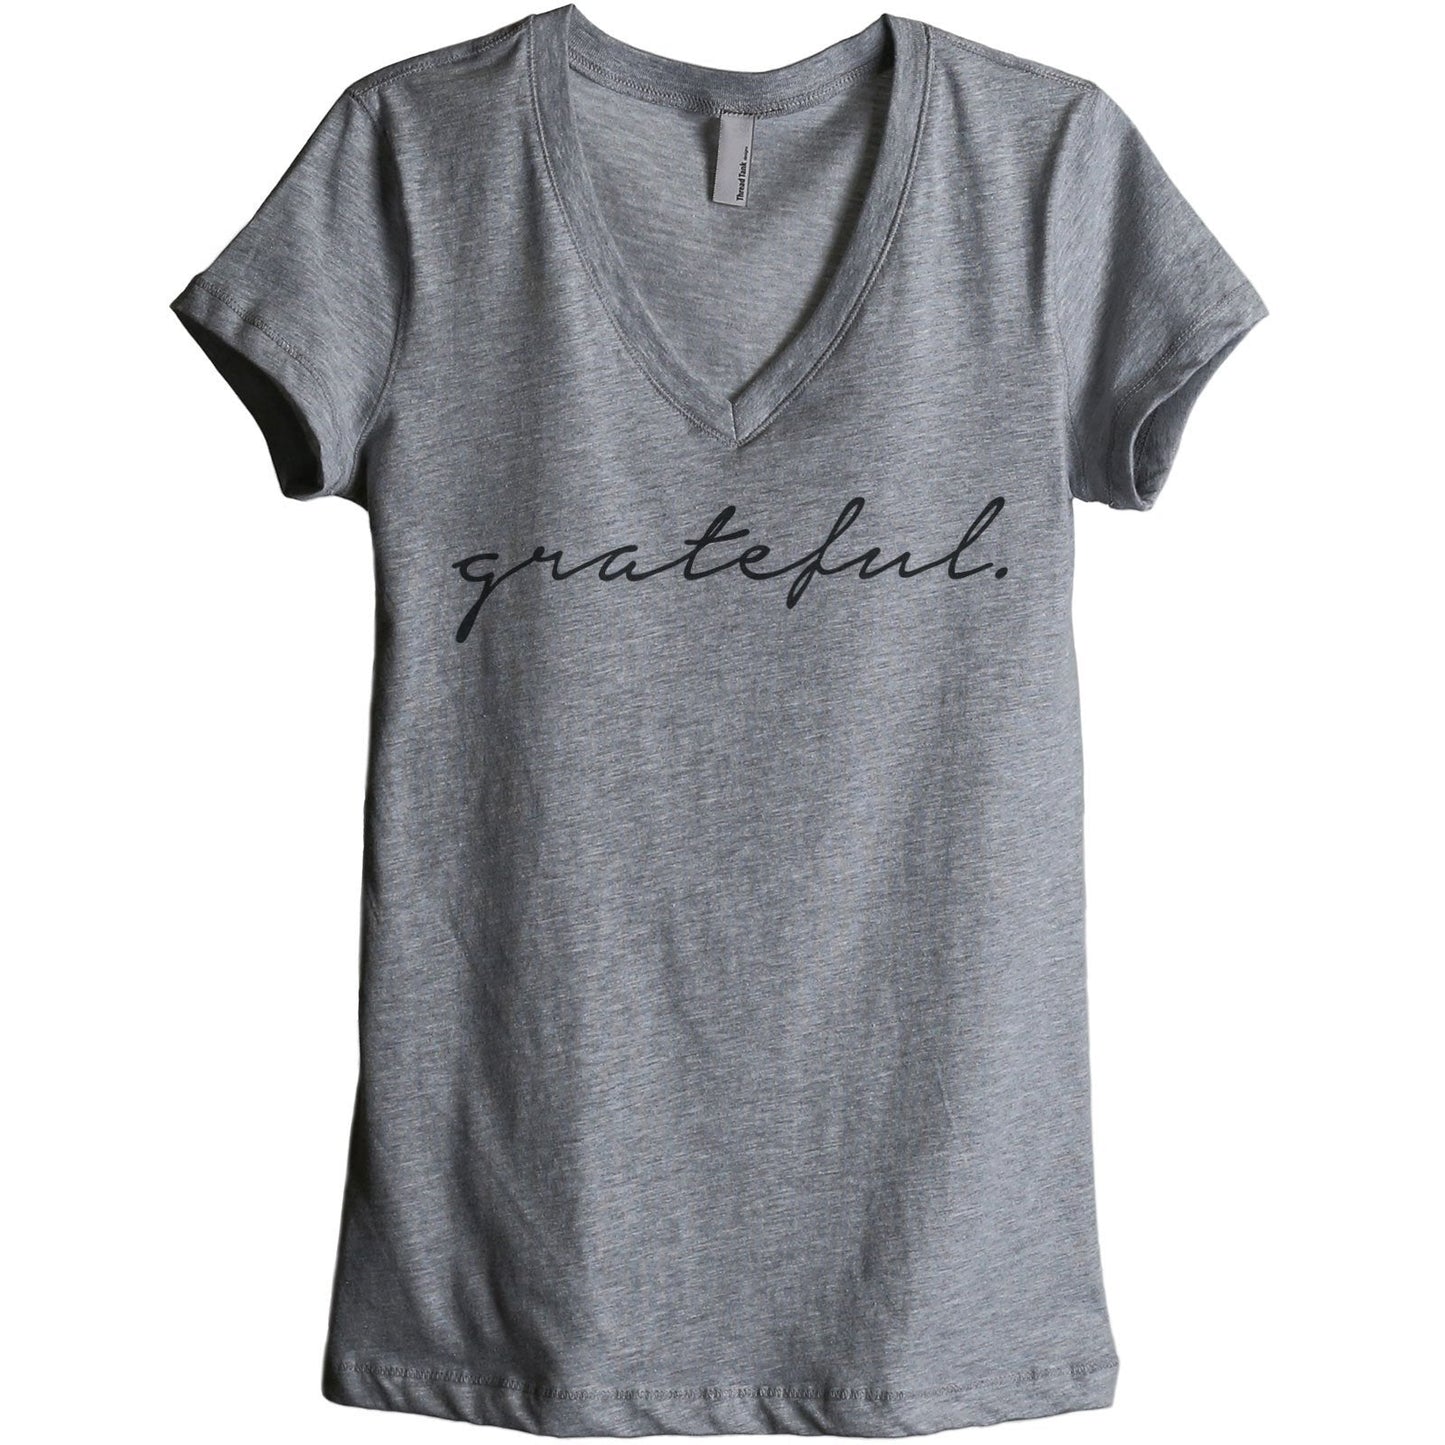 Grateful Women's Relaxed V-Neck T-Shirt Tee Heather Grey